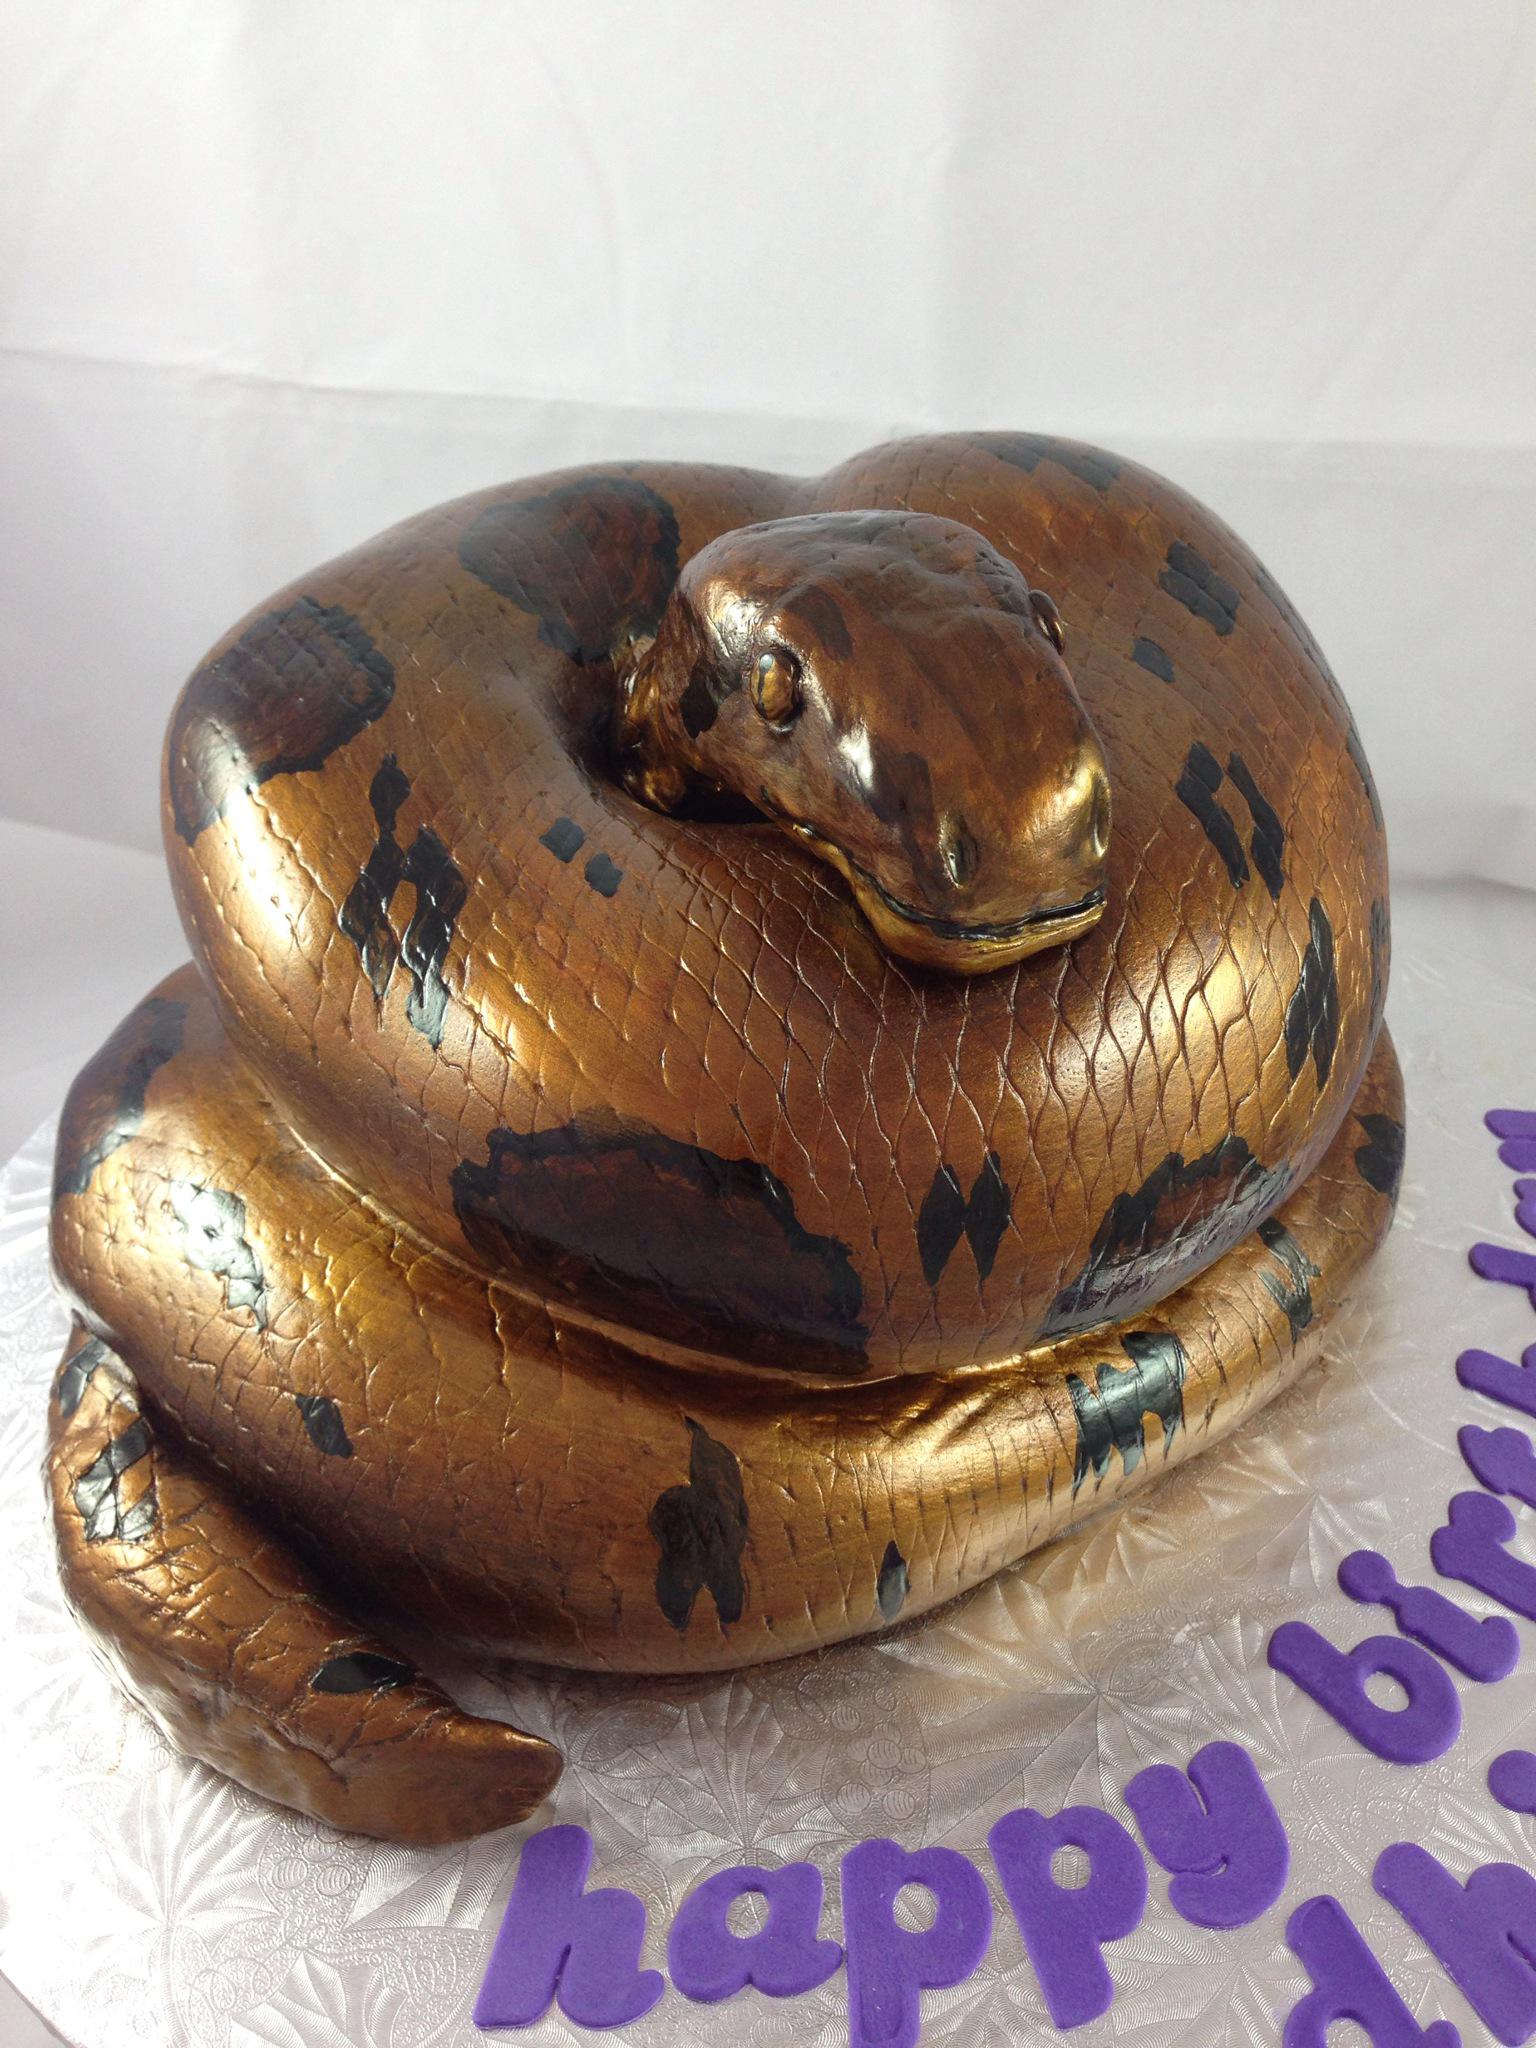 Sculpted Snake (Black Mumba) Cake